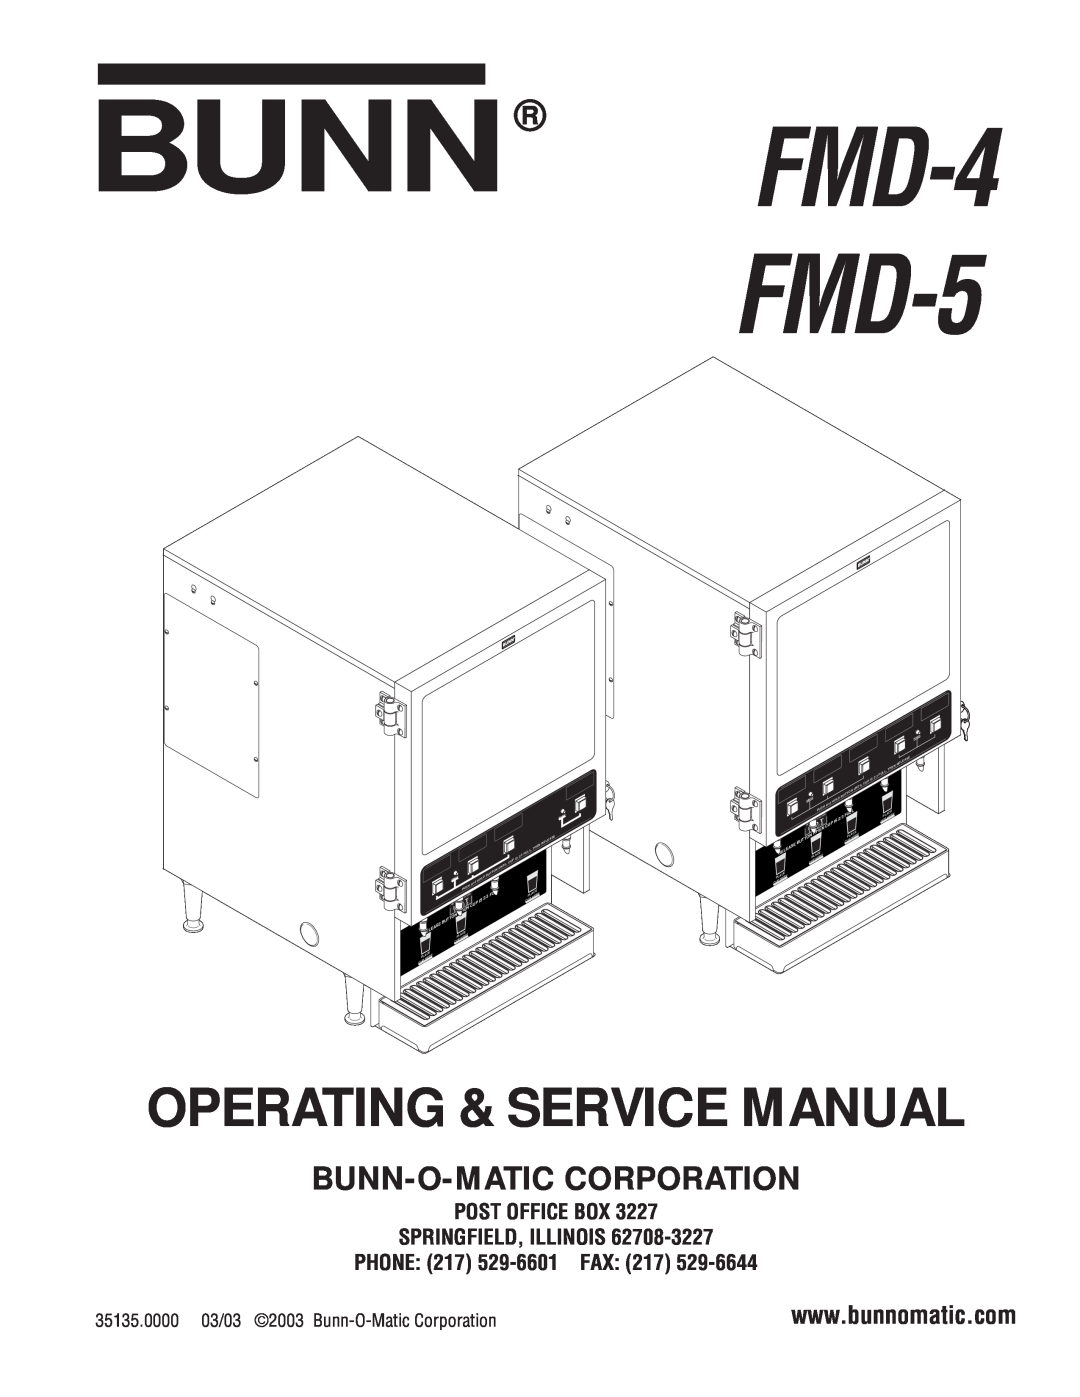 Bunn service manual Post Office Box Springfield, Illinois, PHONE 217 529-6601FAX, BUNN FMD-4 FMD-5, Release, Full, When 